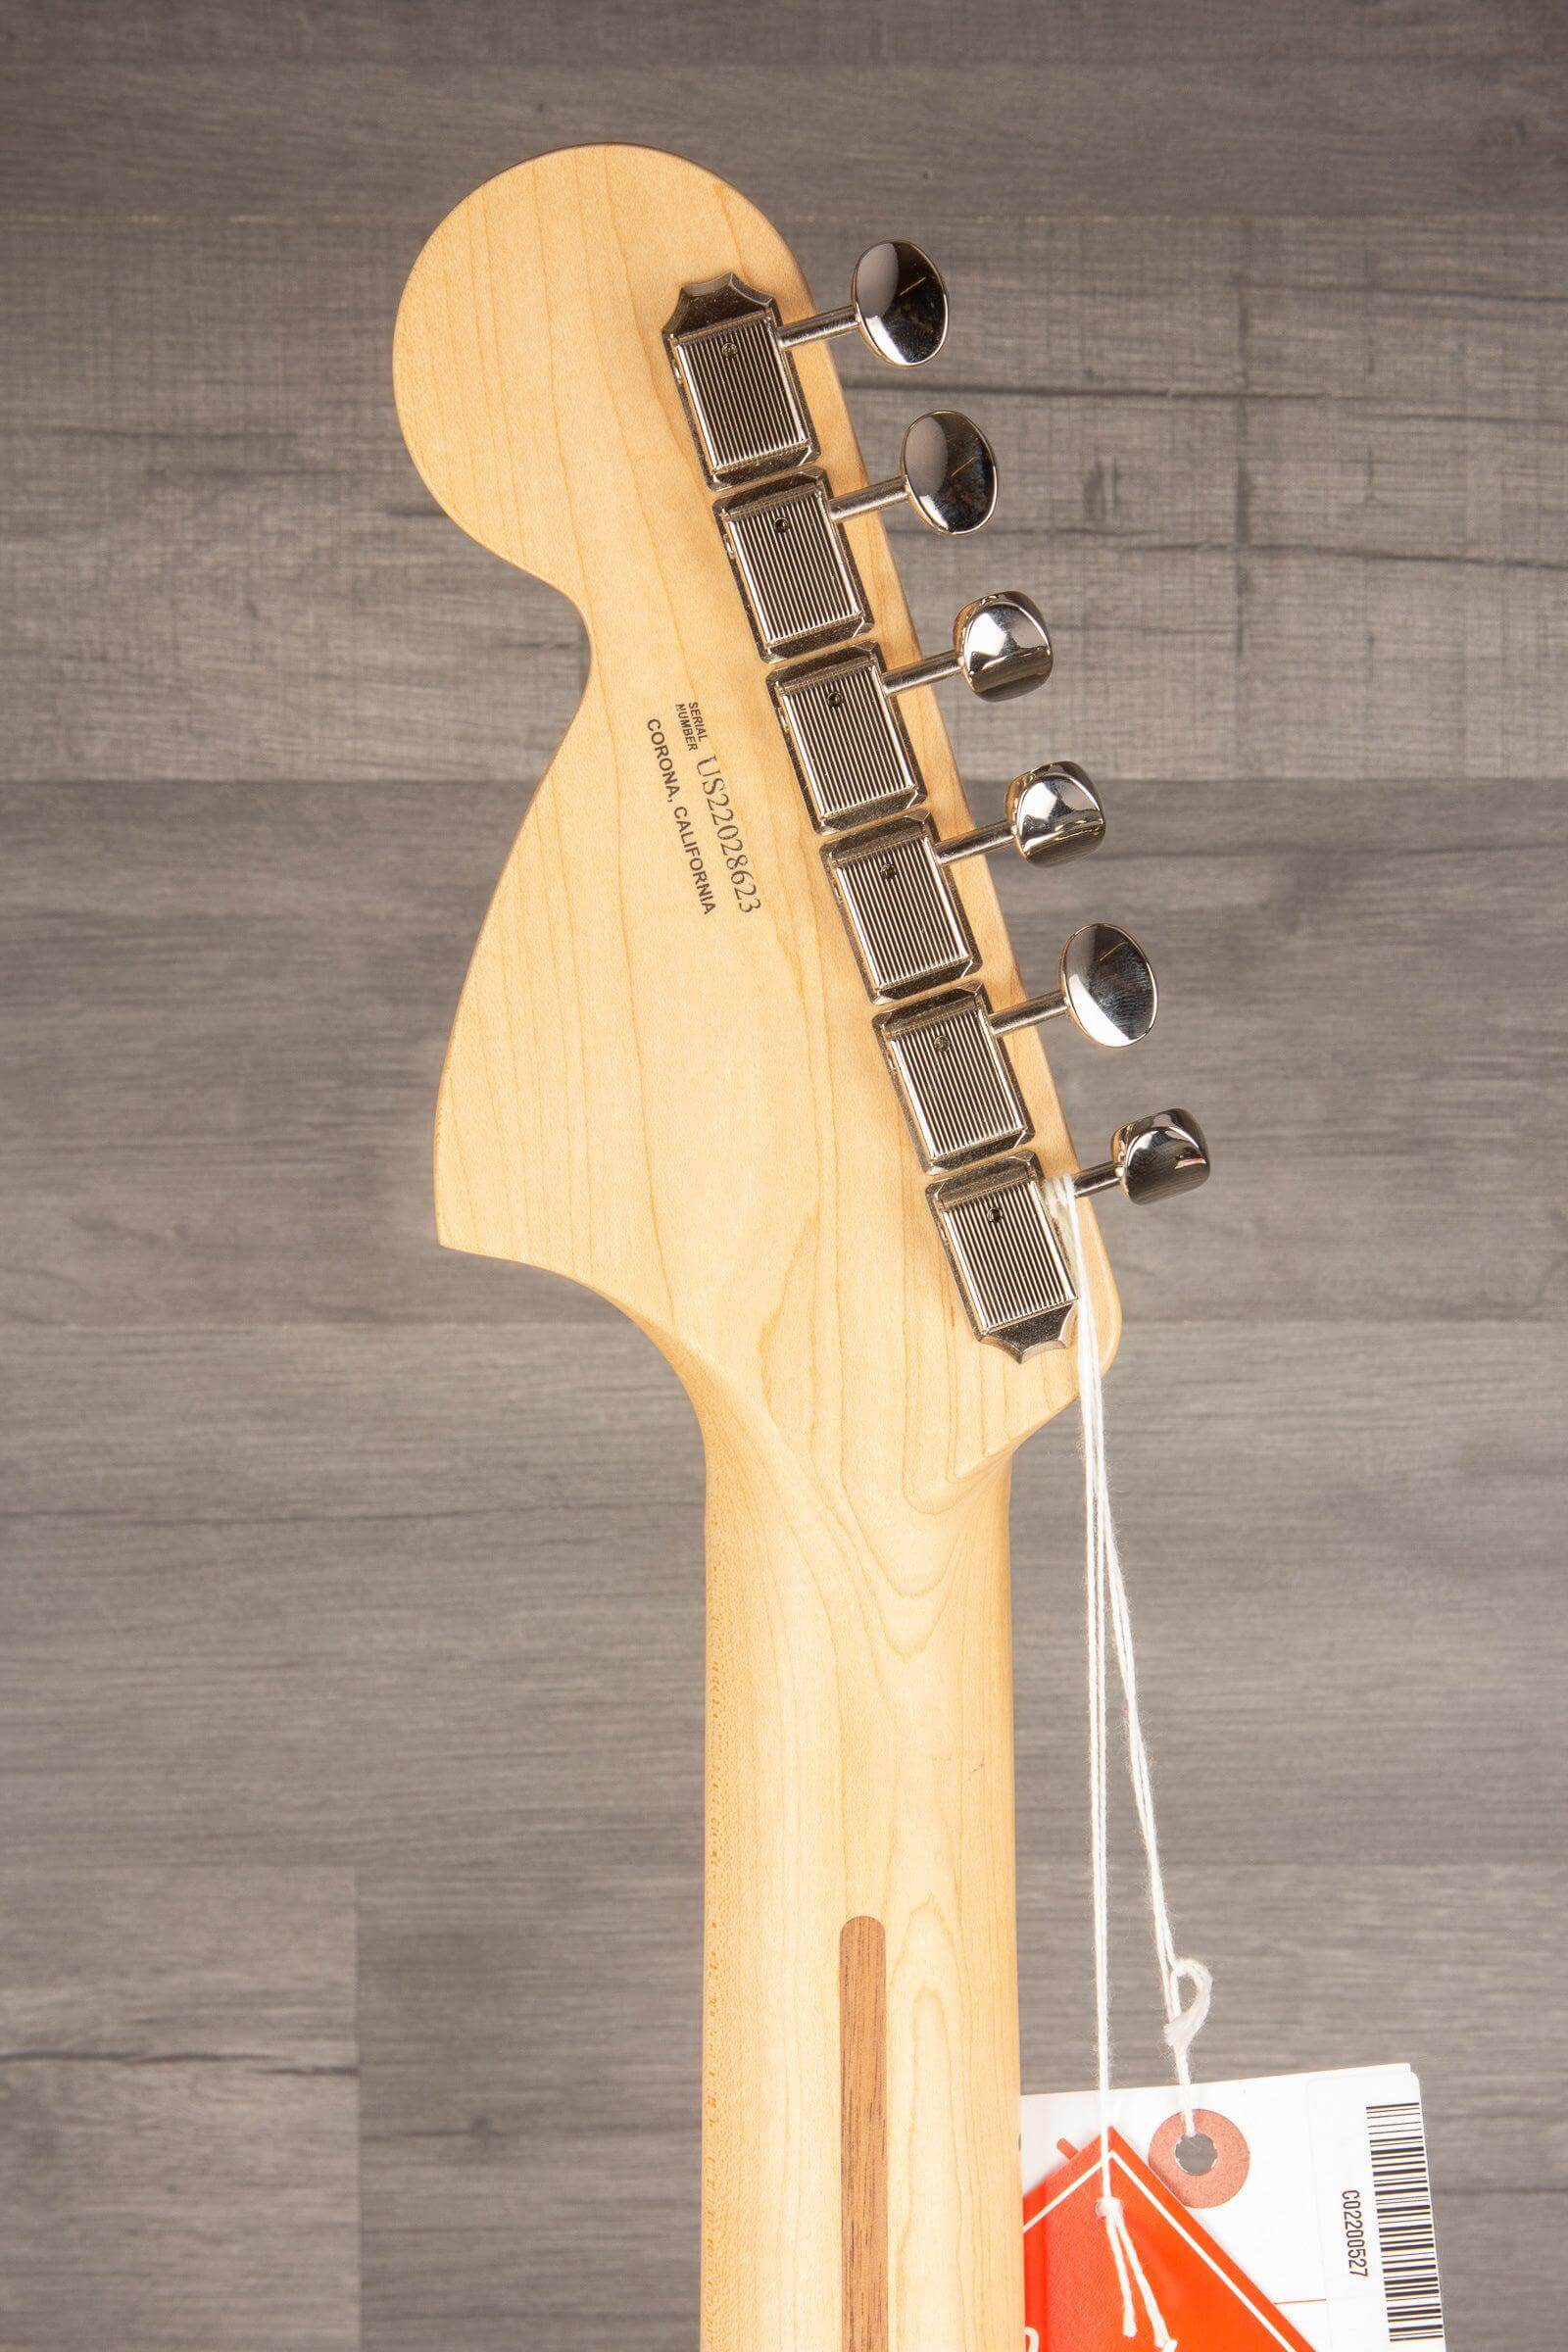 Fender American Performer HSS Stratocaster - Black MN - MusicStreet